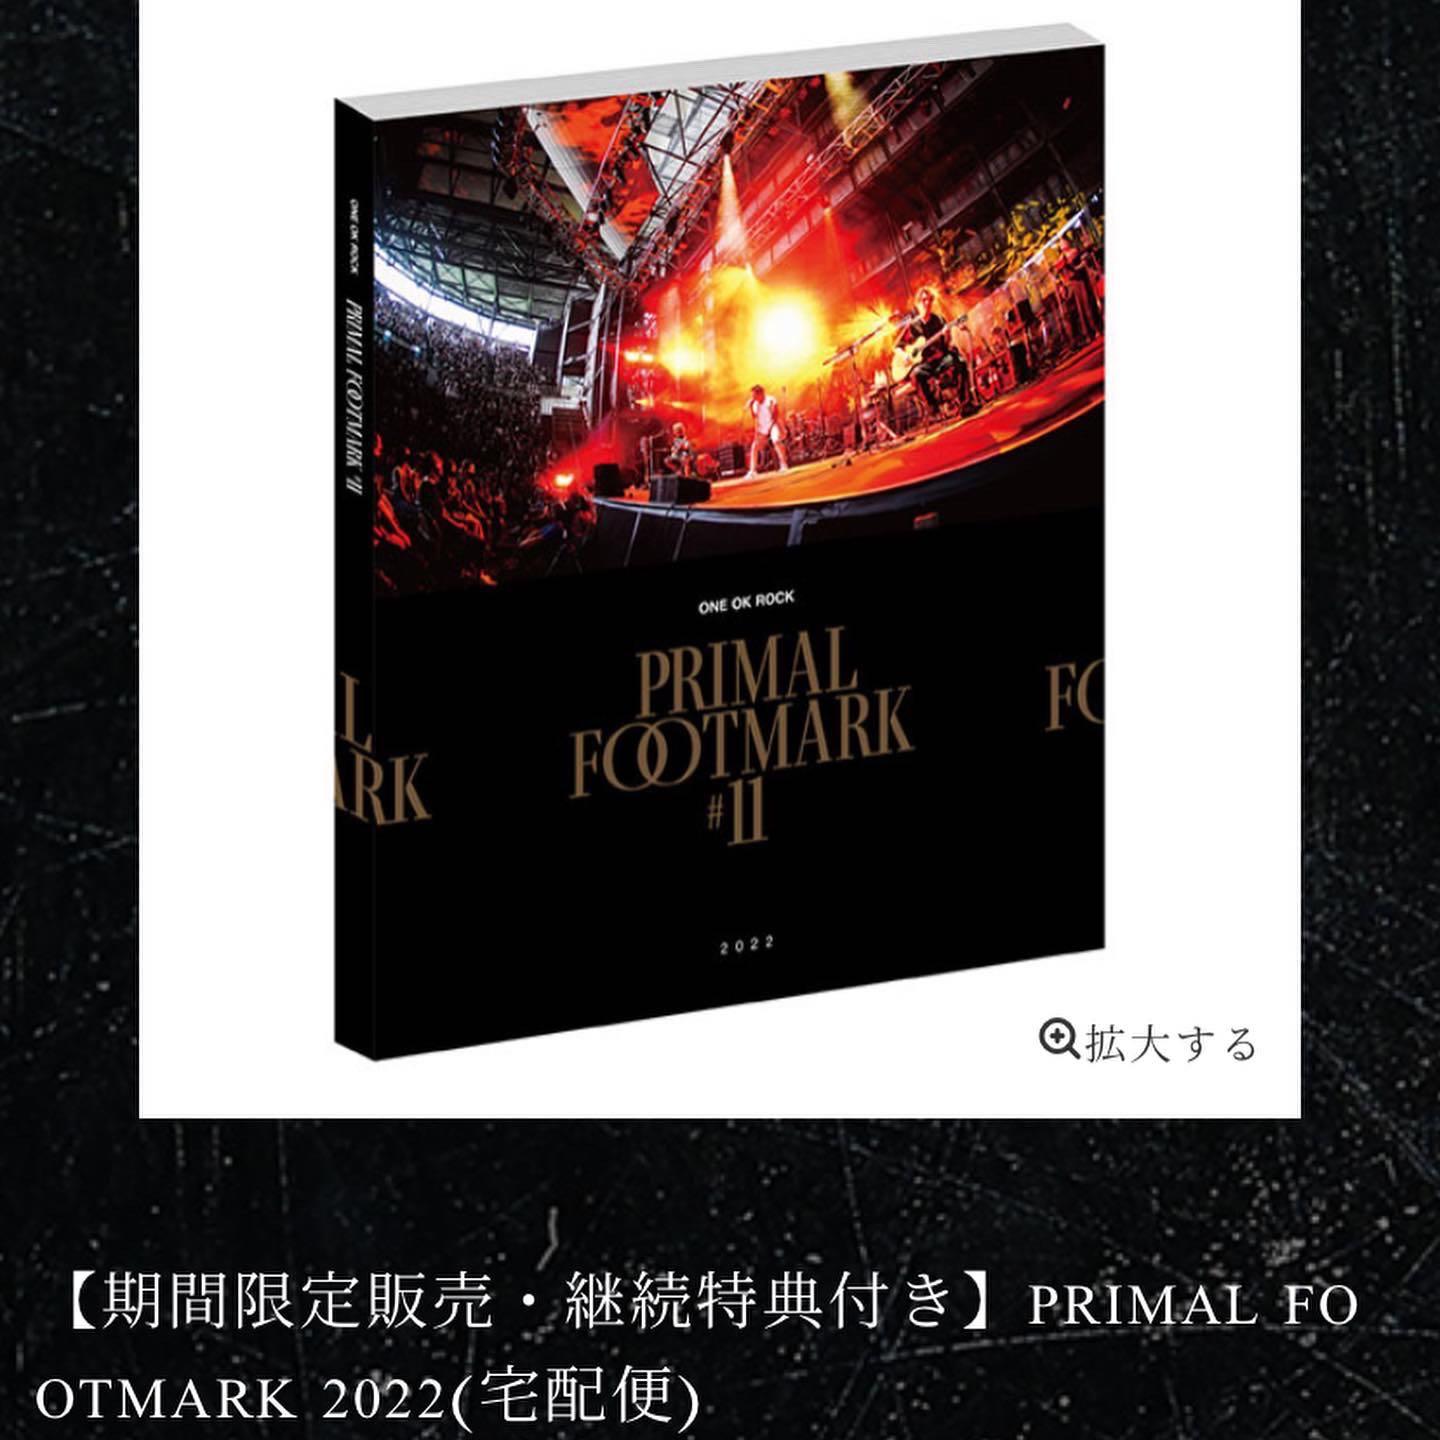 ONE OK ROCK PRAIMAL FOOTMARK 2024✨#13 - アート・デザイン・音楽